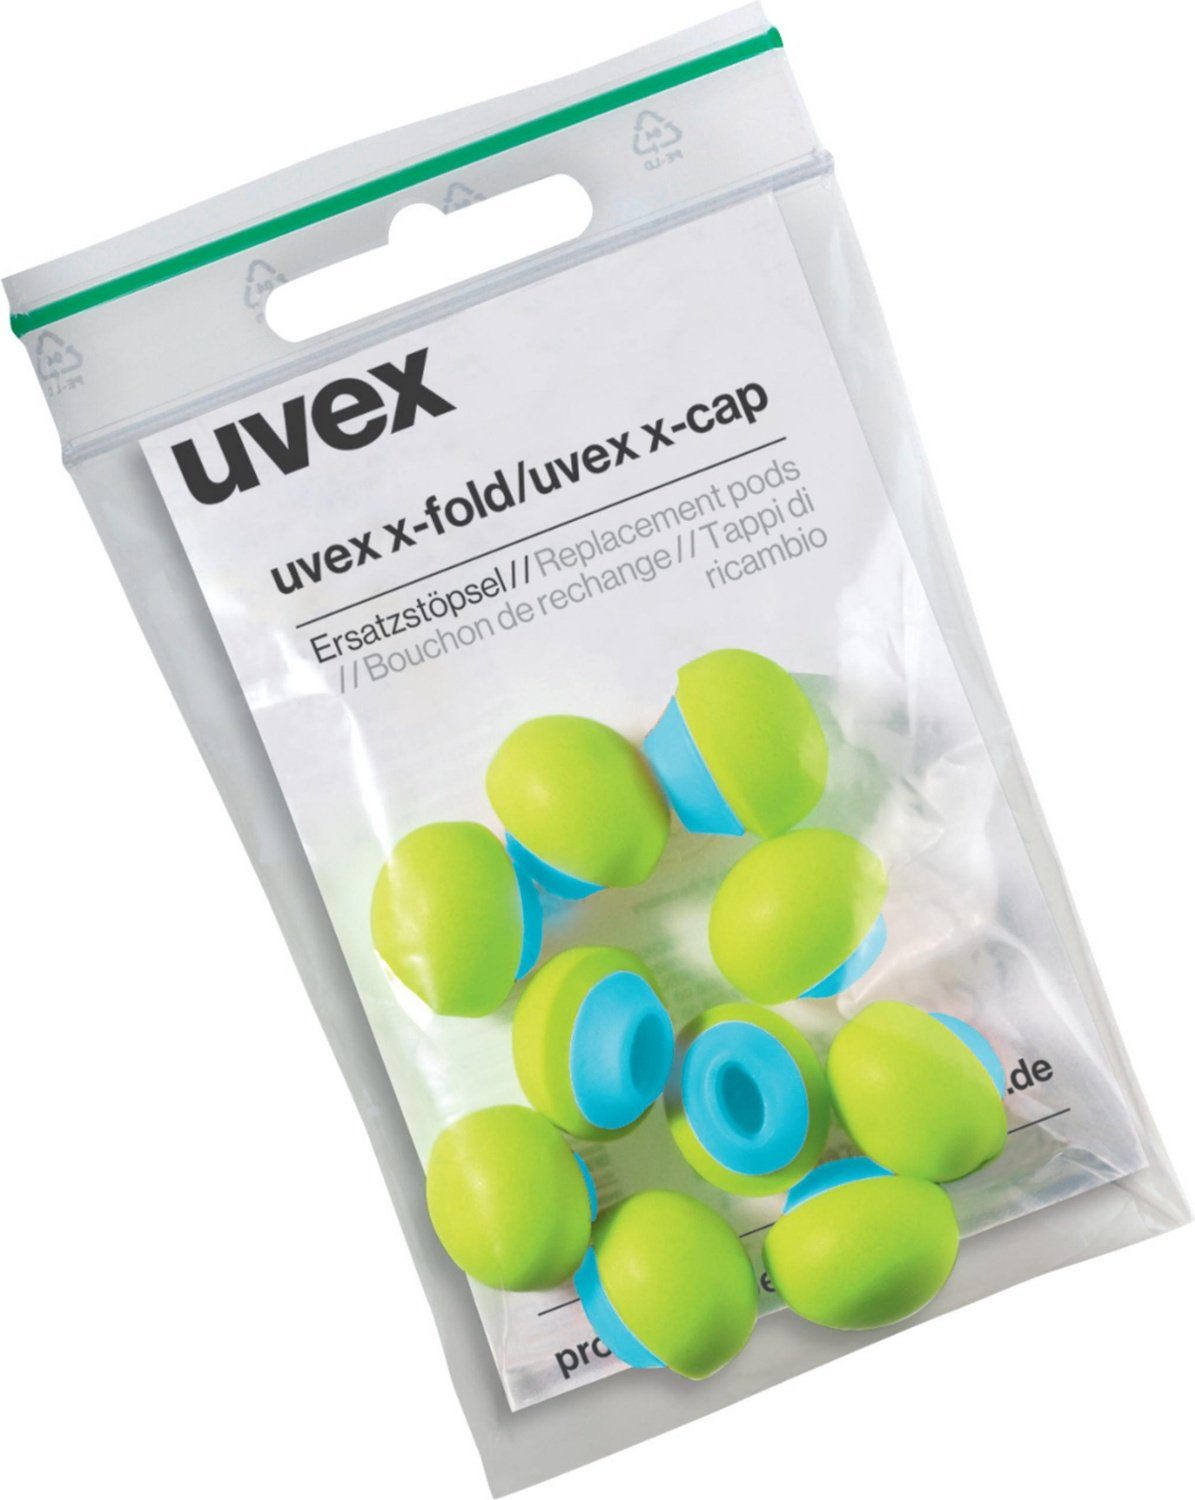 Uvex Kopfschutz